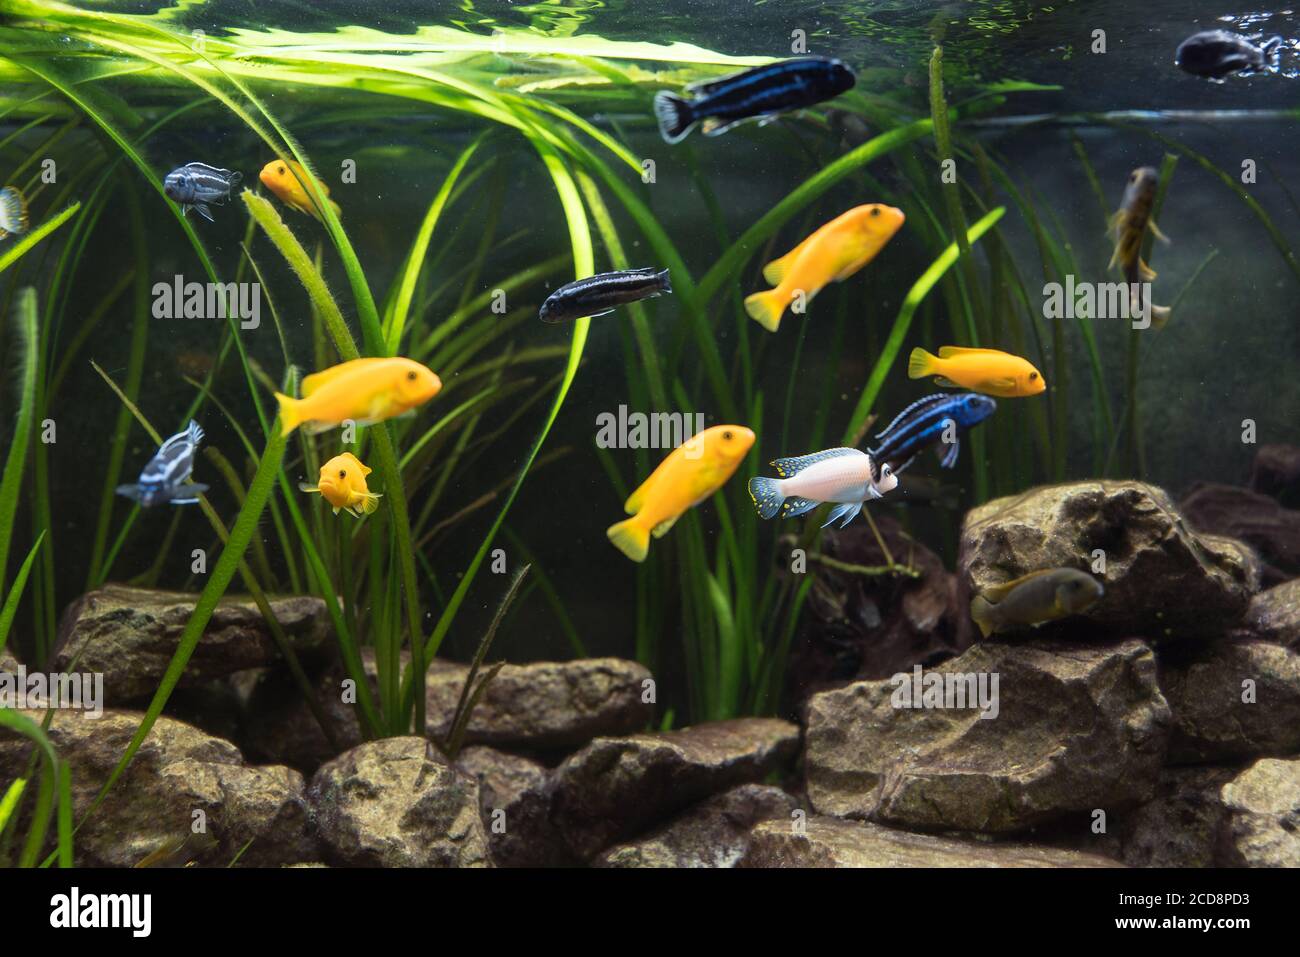 shoal of malawi perch fish in aquarium Stock Photo